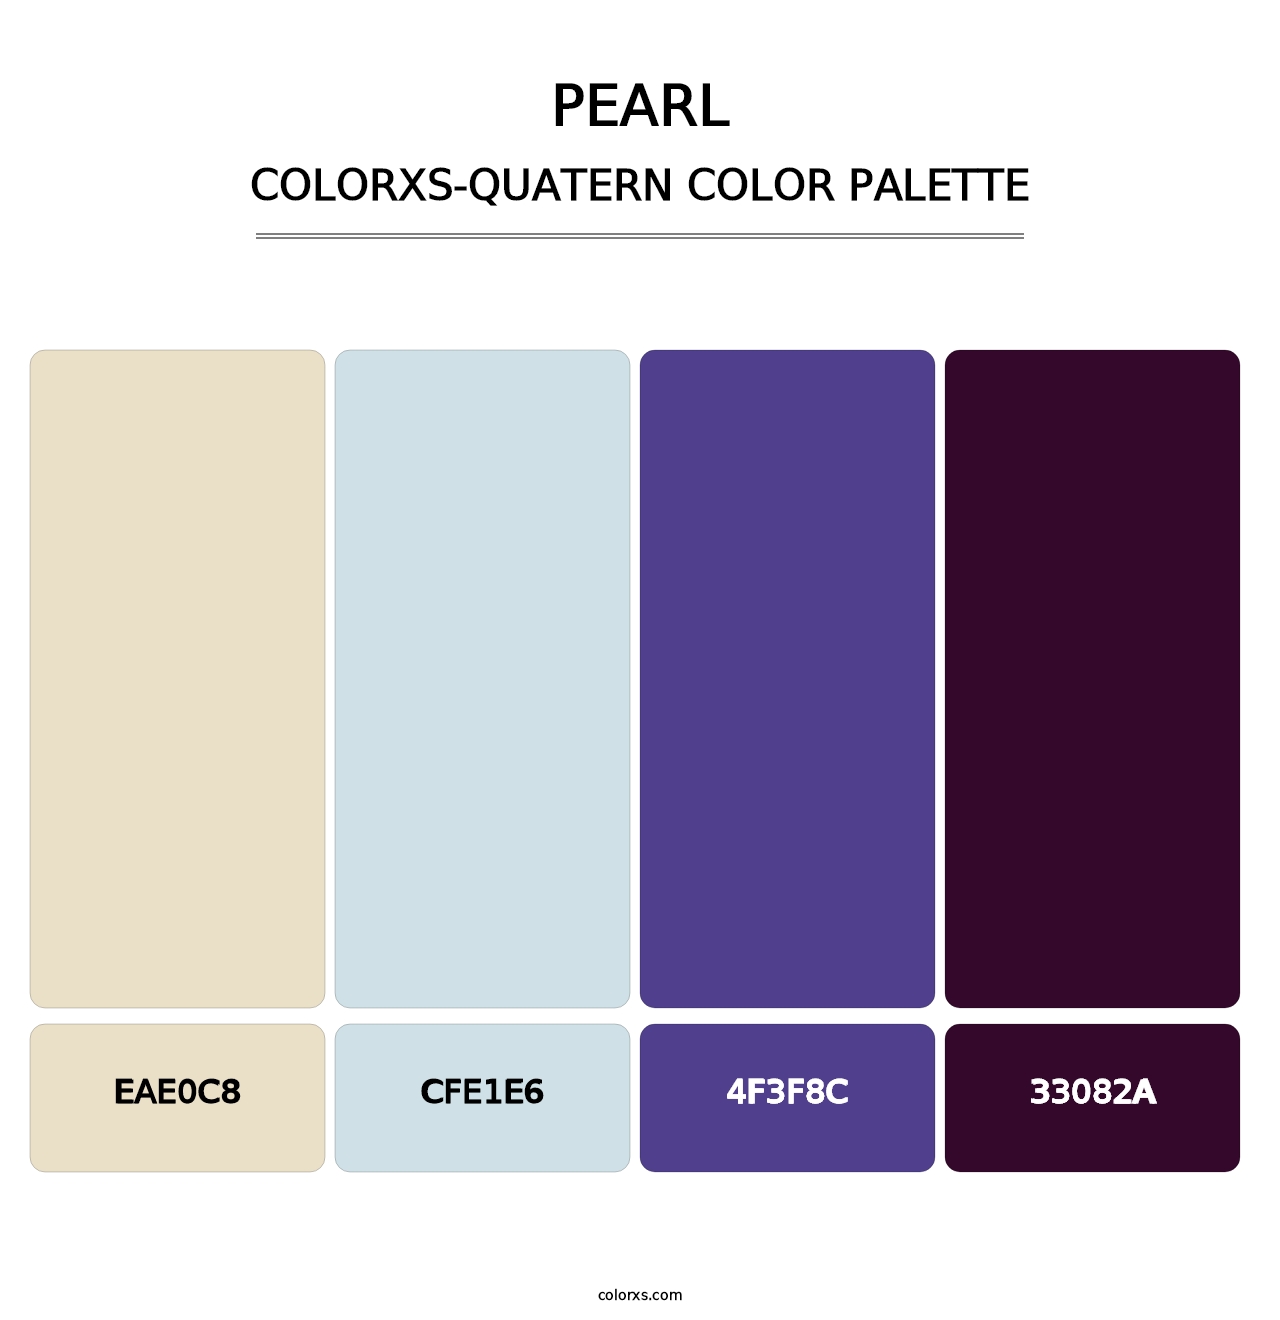 Pearl - Colorxs Quatern Palette